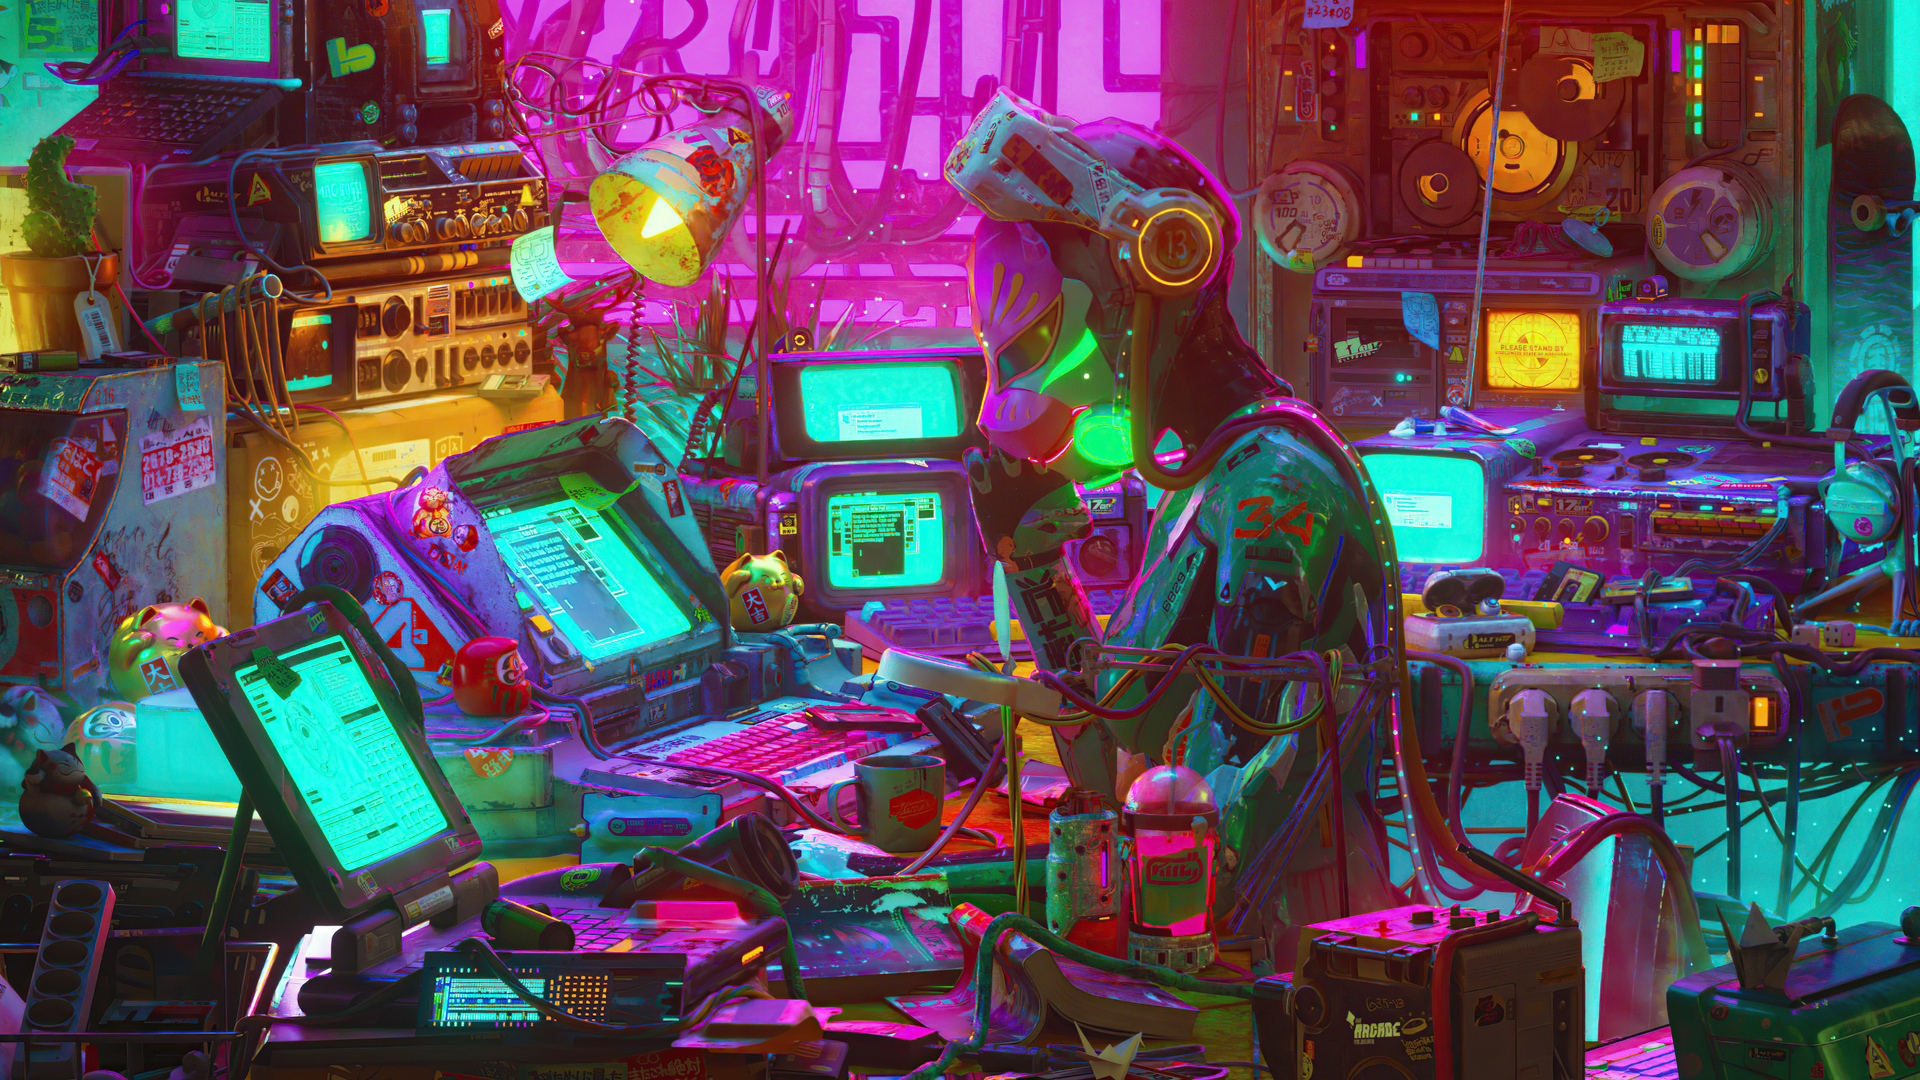 Digital Art Artwork Illustration Room Indoors Environment Science Fiction Colorful Cyberpunk Compute 1920x1080